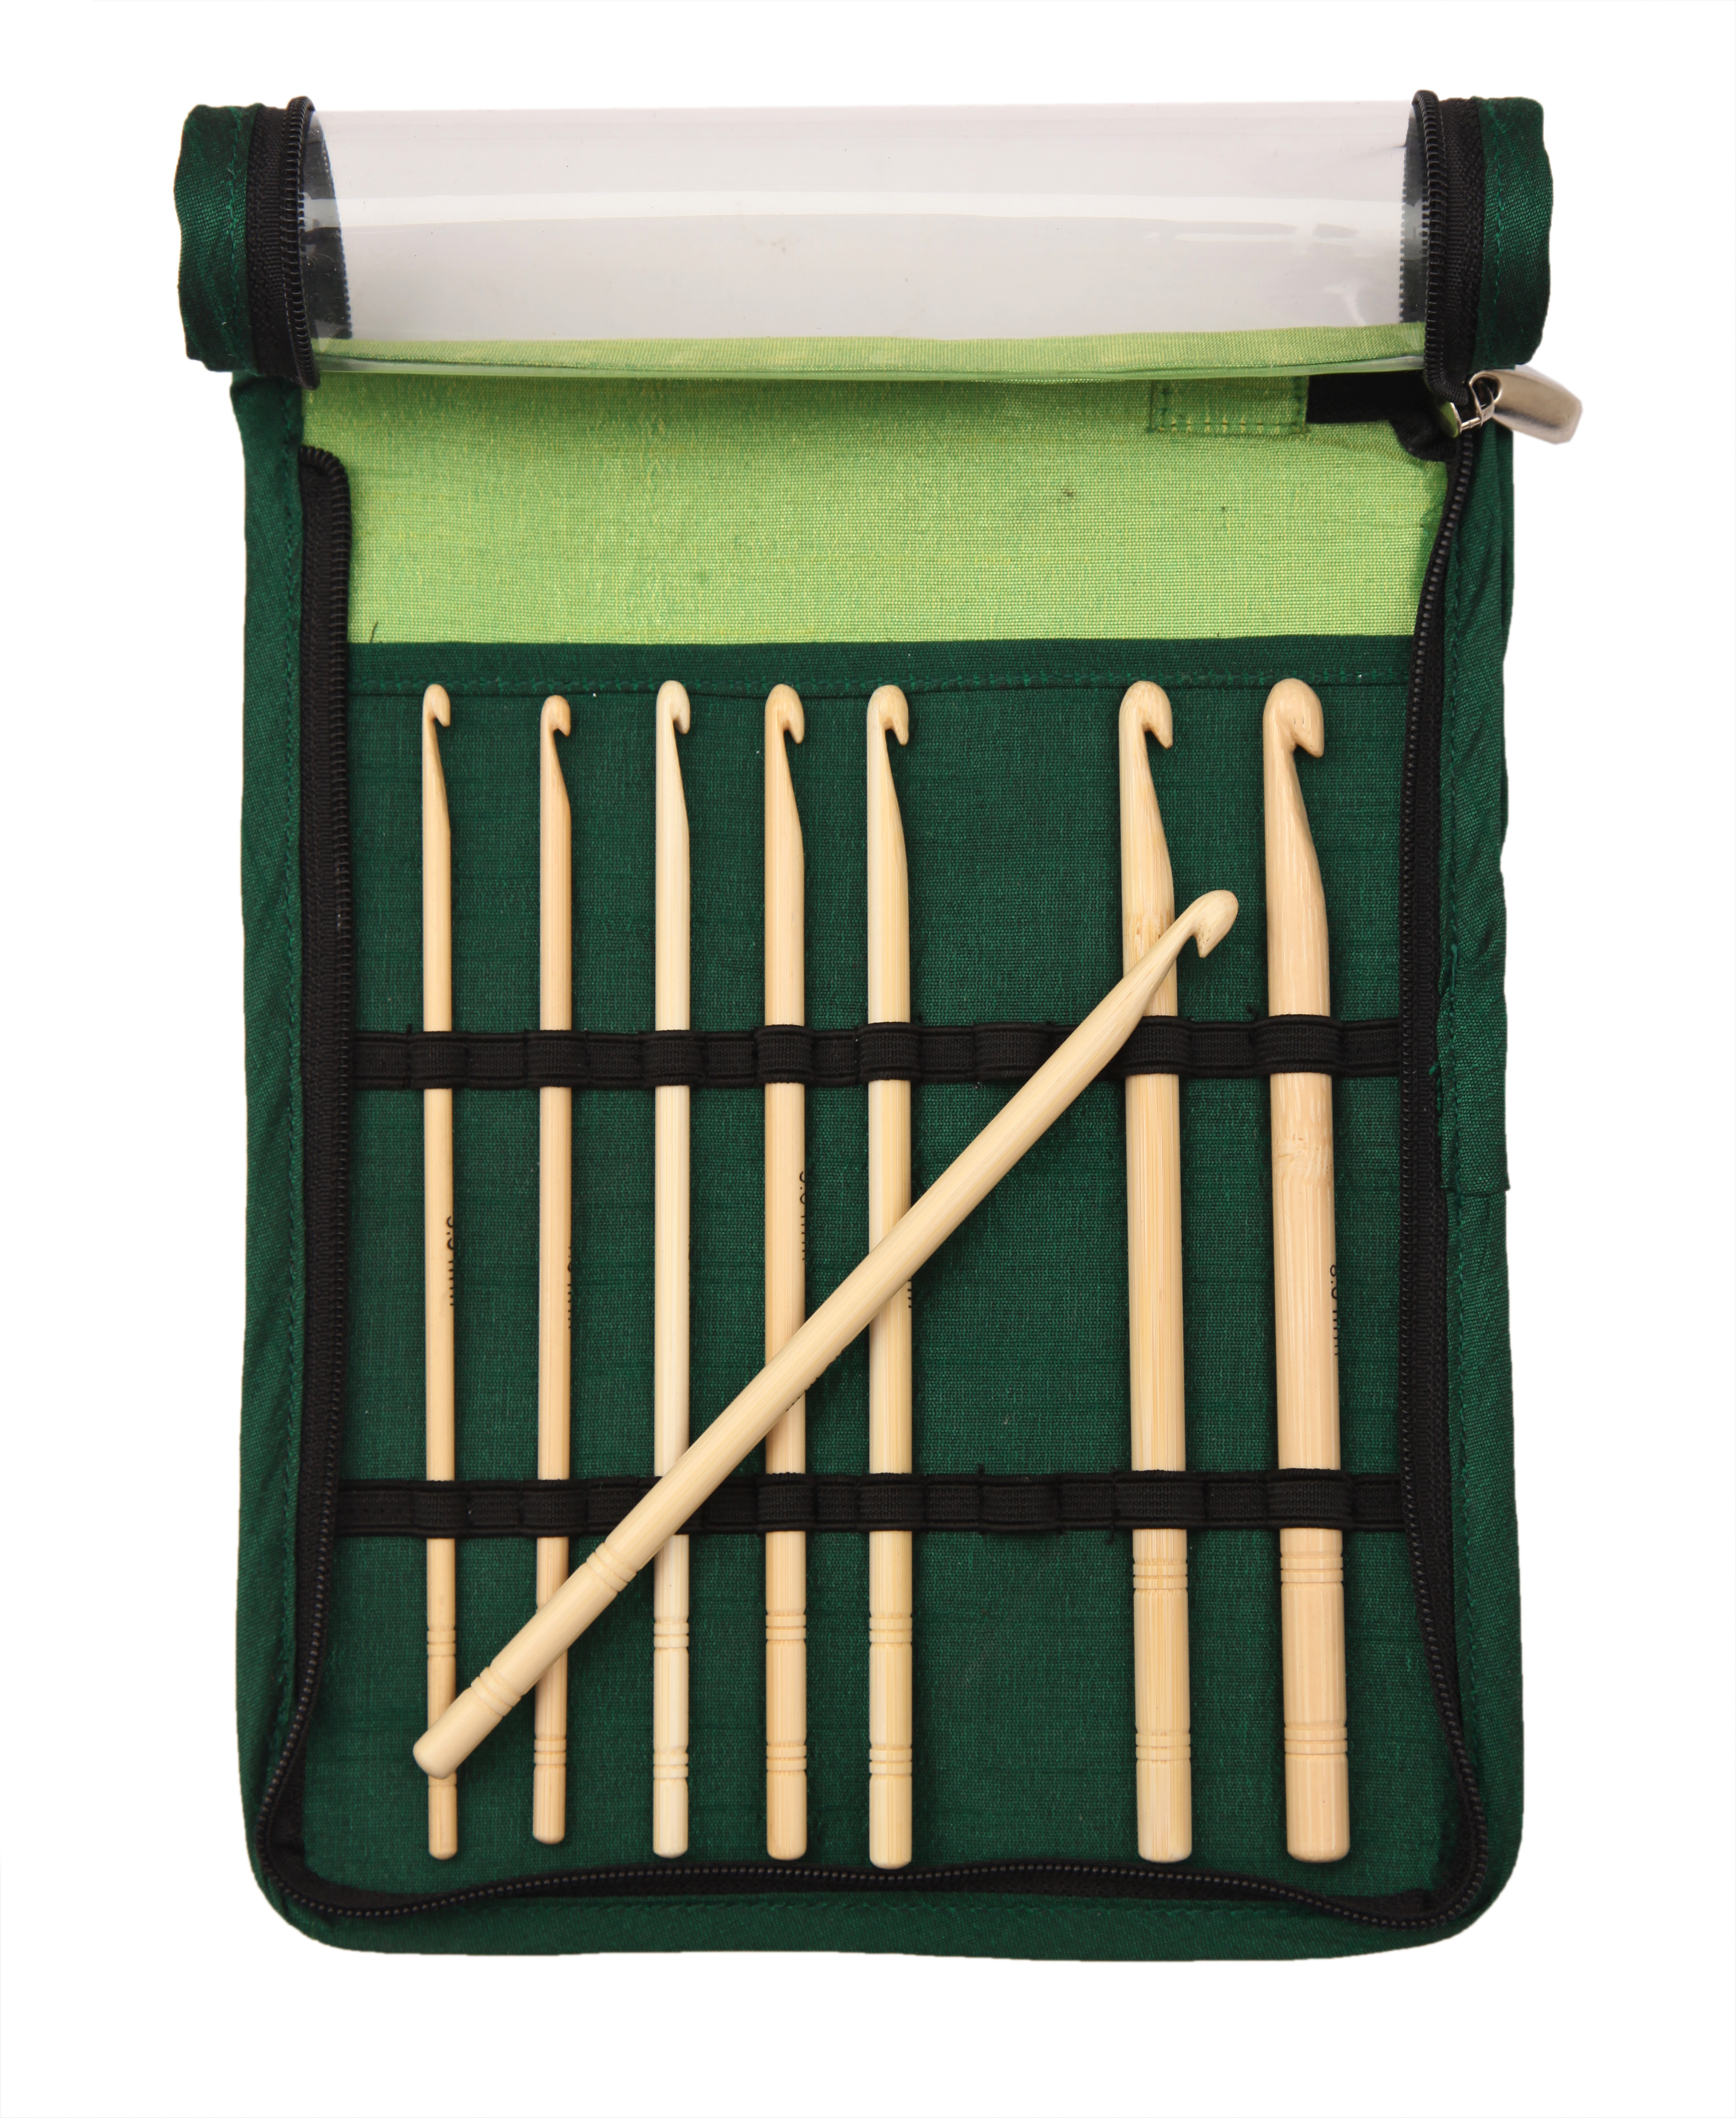 KnitPro Bamboo virknålar set - 3,5-8,0 mm